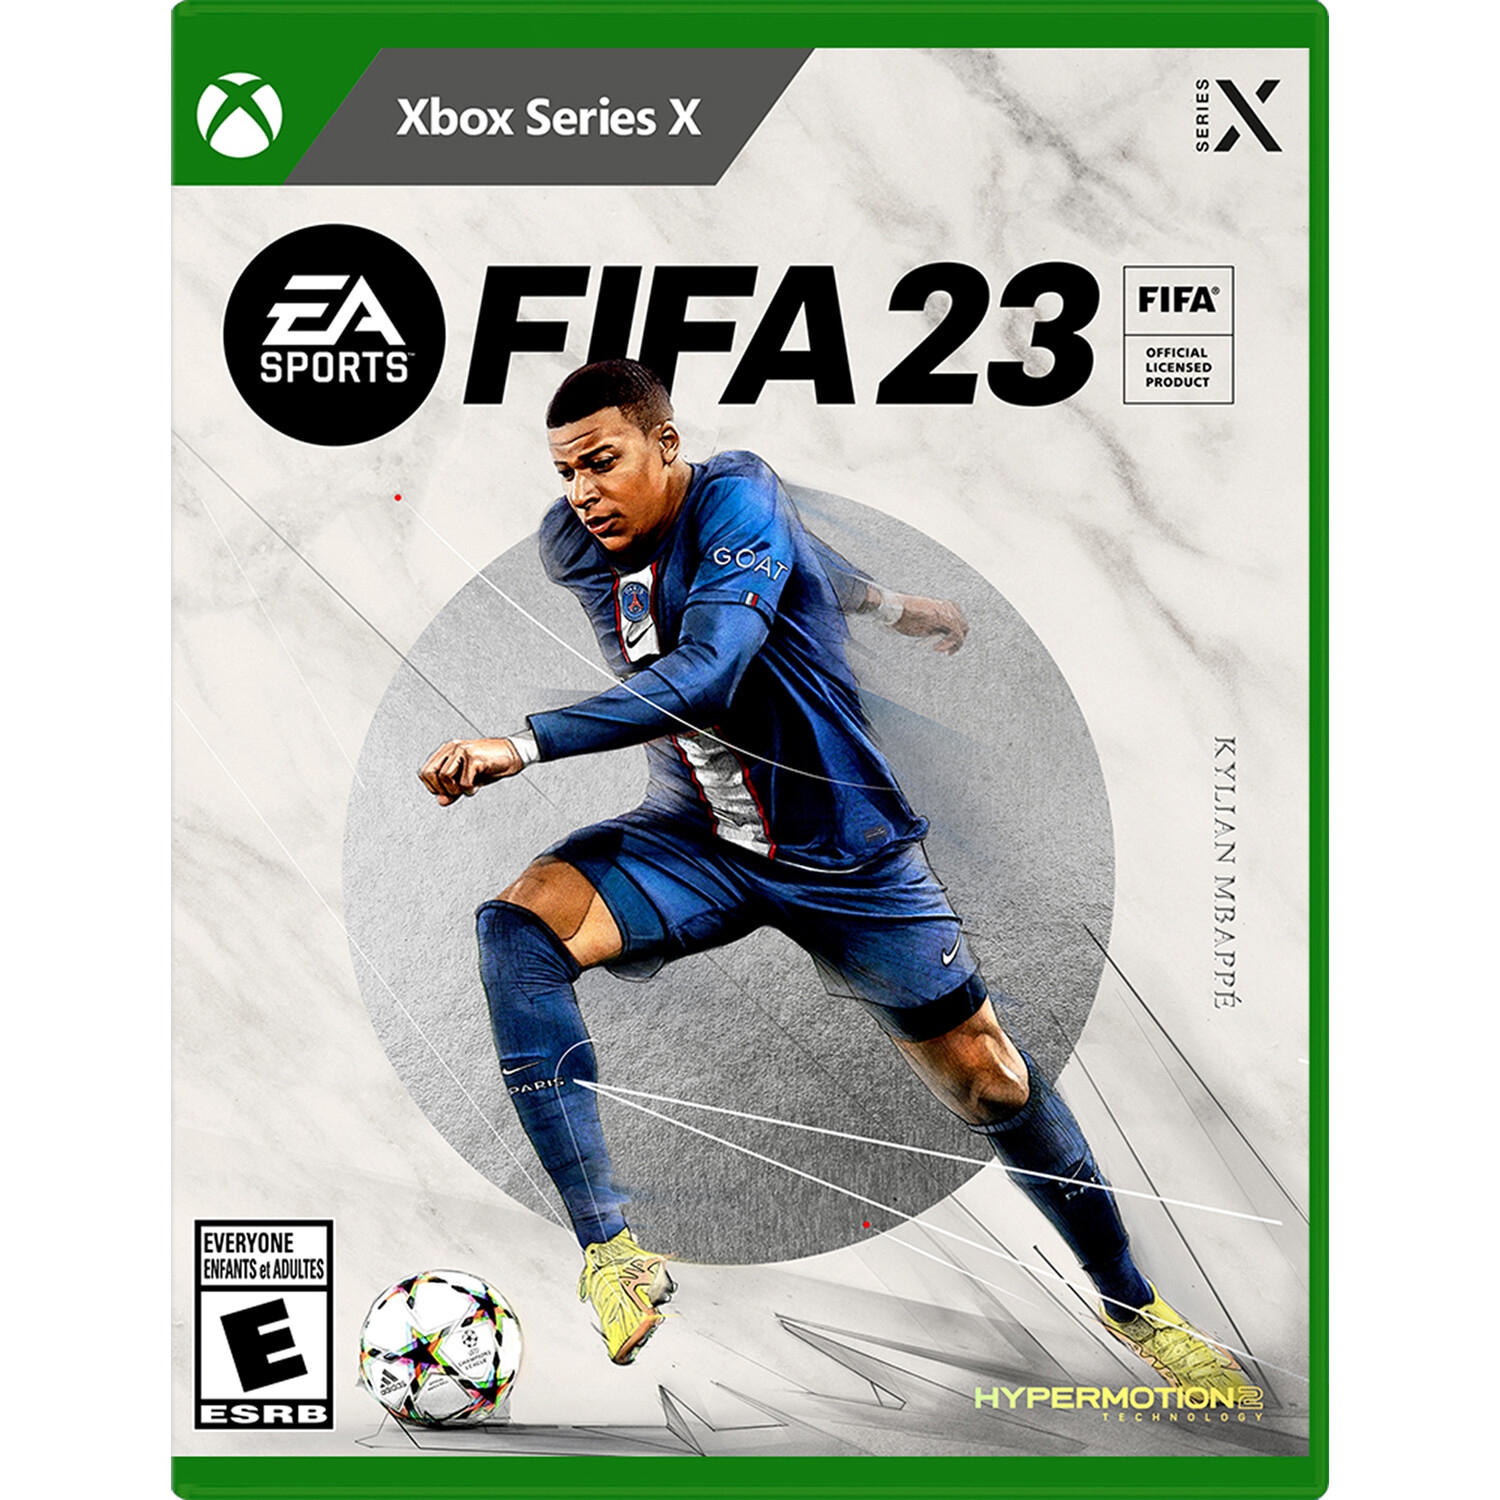 FIFA 23 for Xbox Series X [VIDEOGAMES] Xbox Series X